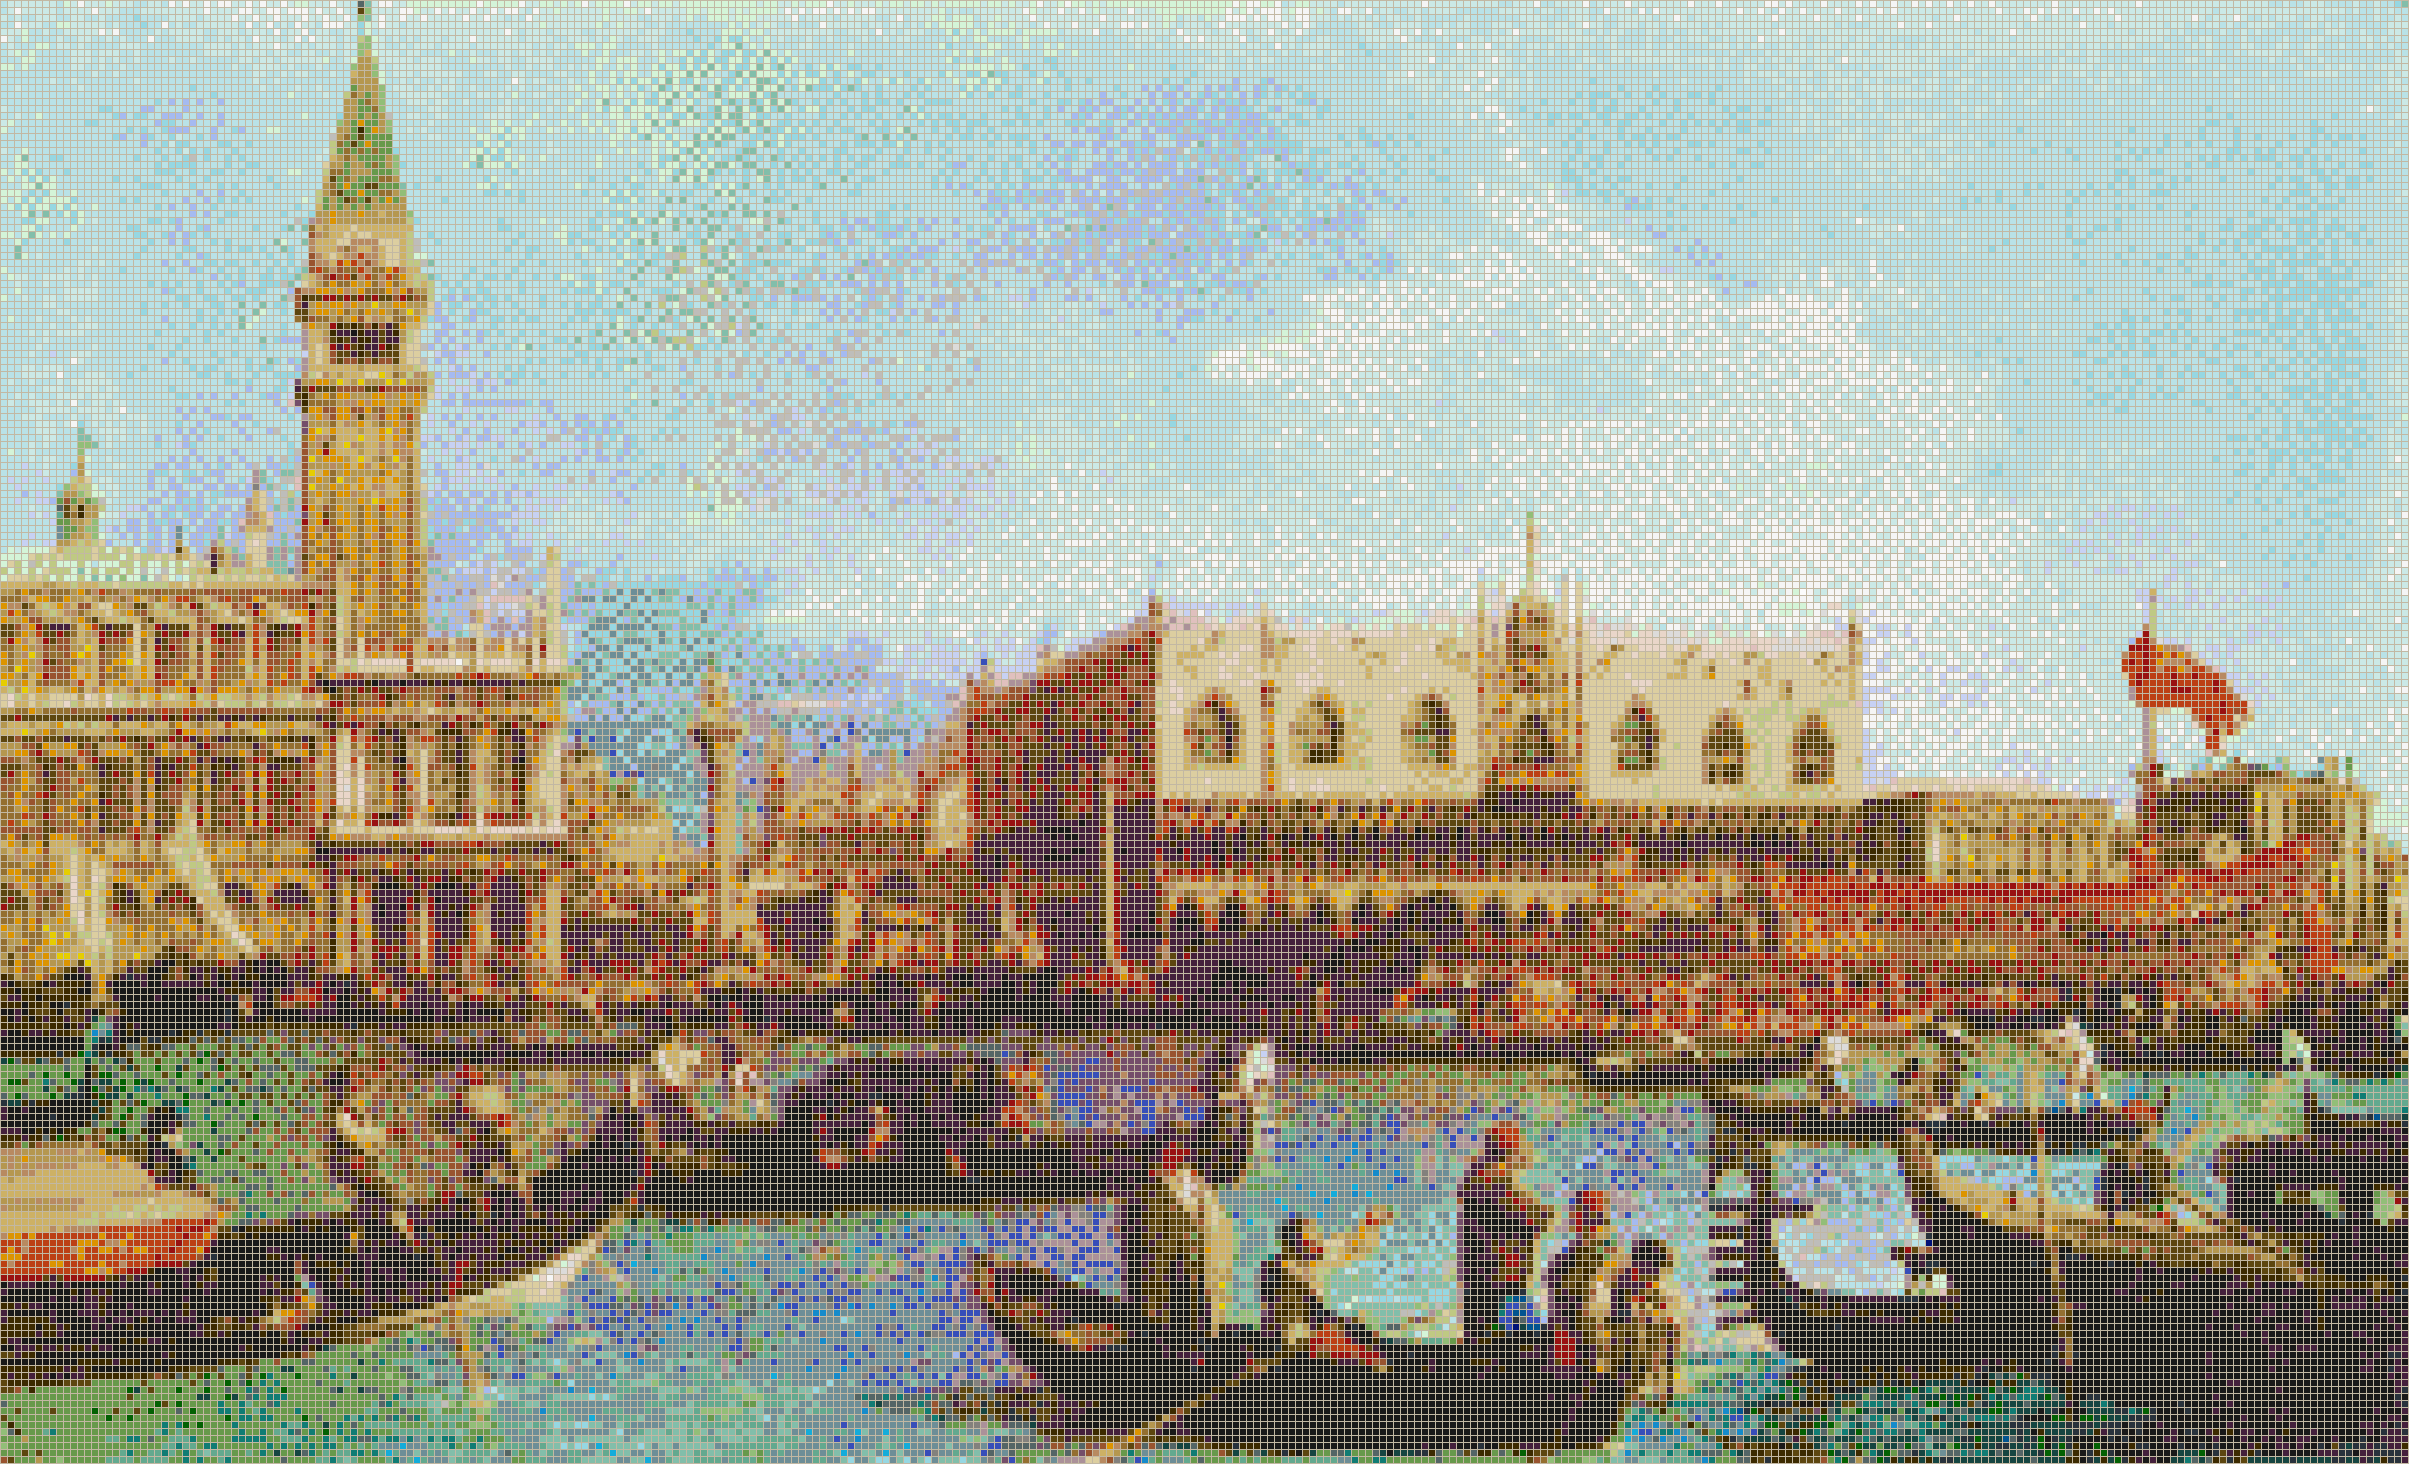 Bucentoro returns to the Molo, Venice (Canaletto) - Mosaic Tile Art